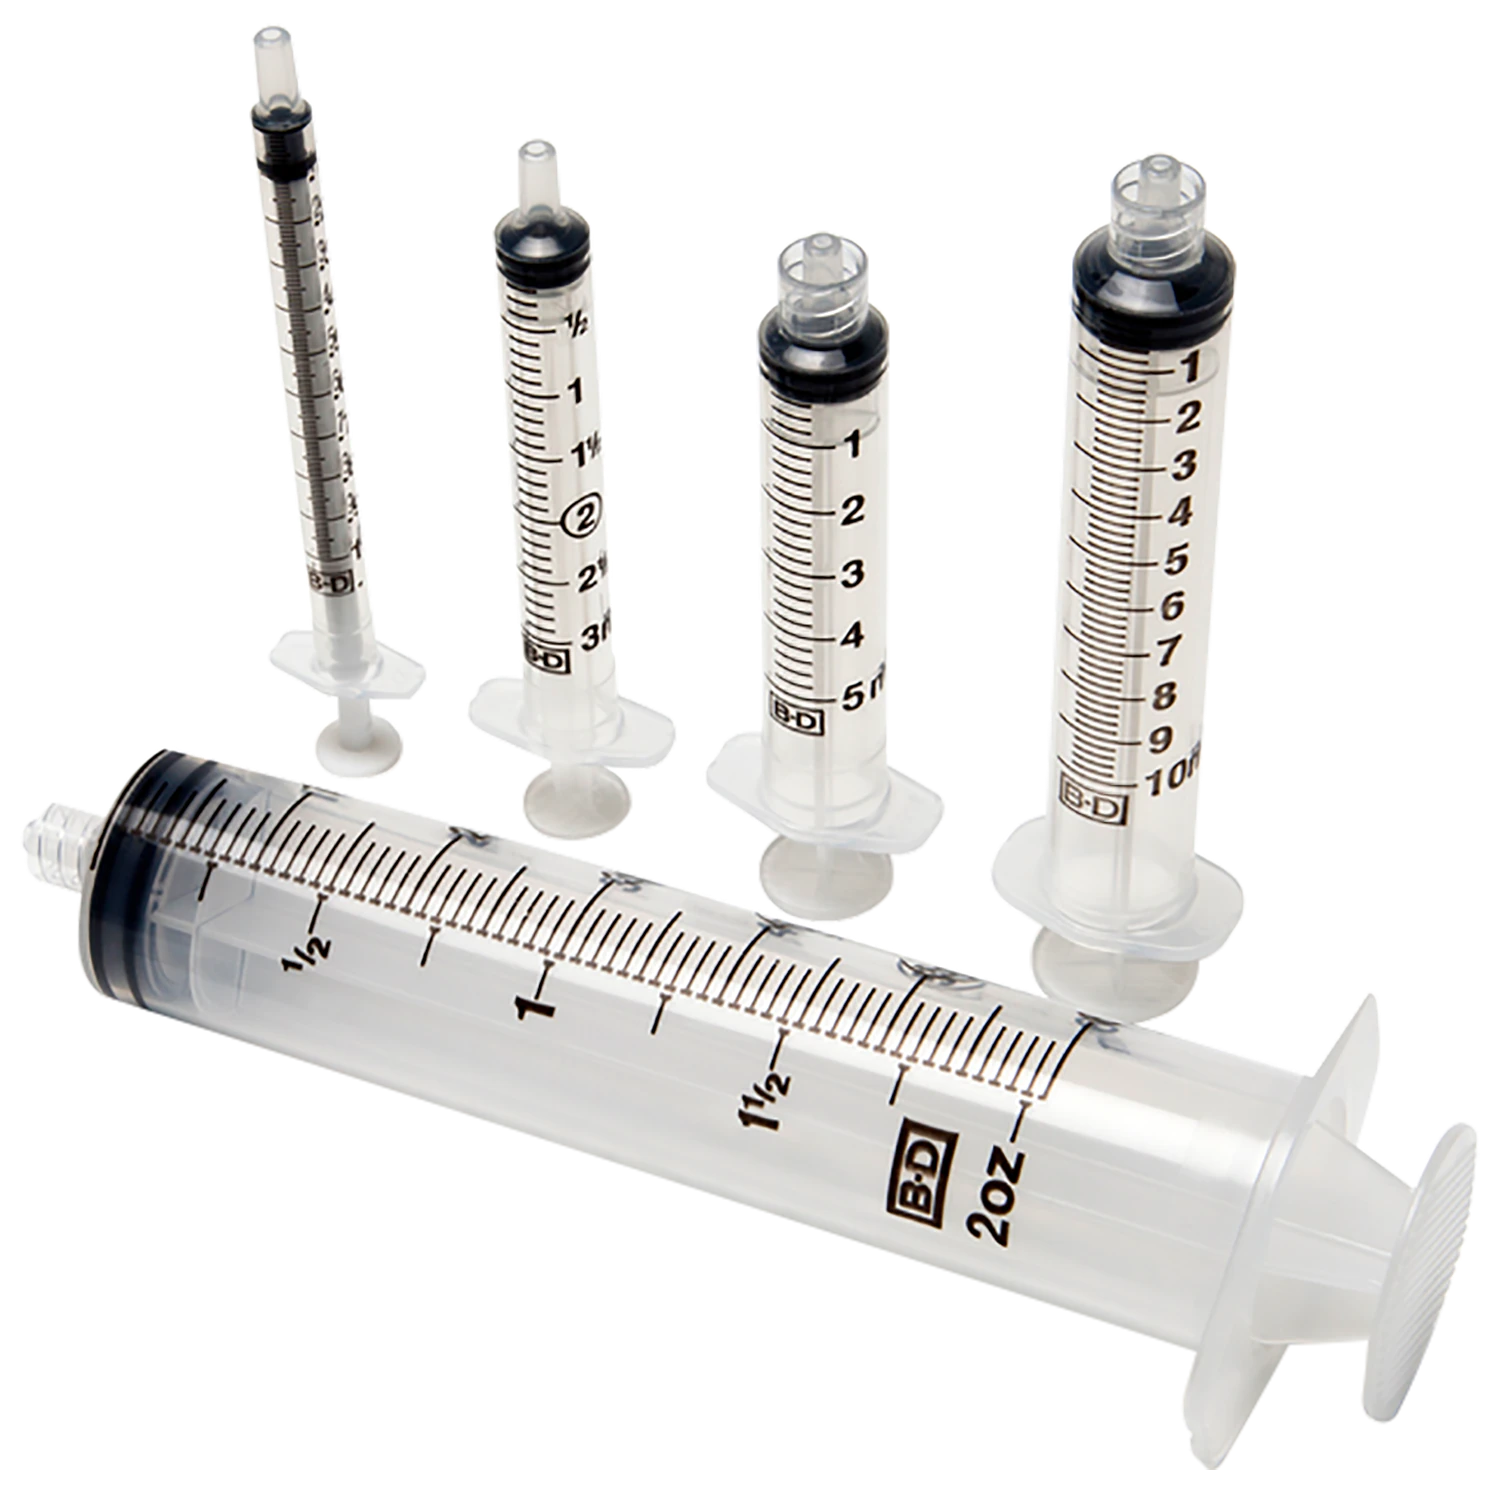 BD Luer-Lok™ Tip Syringe sterile, single use, 1 mL - 309628